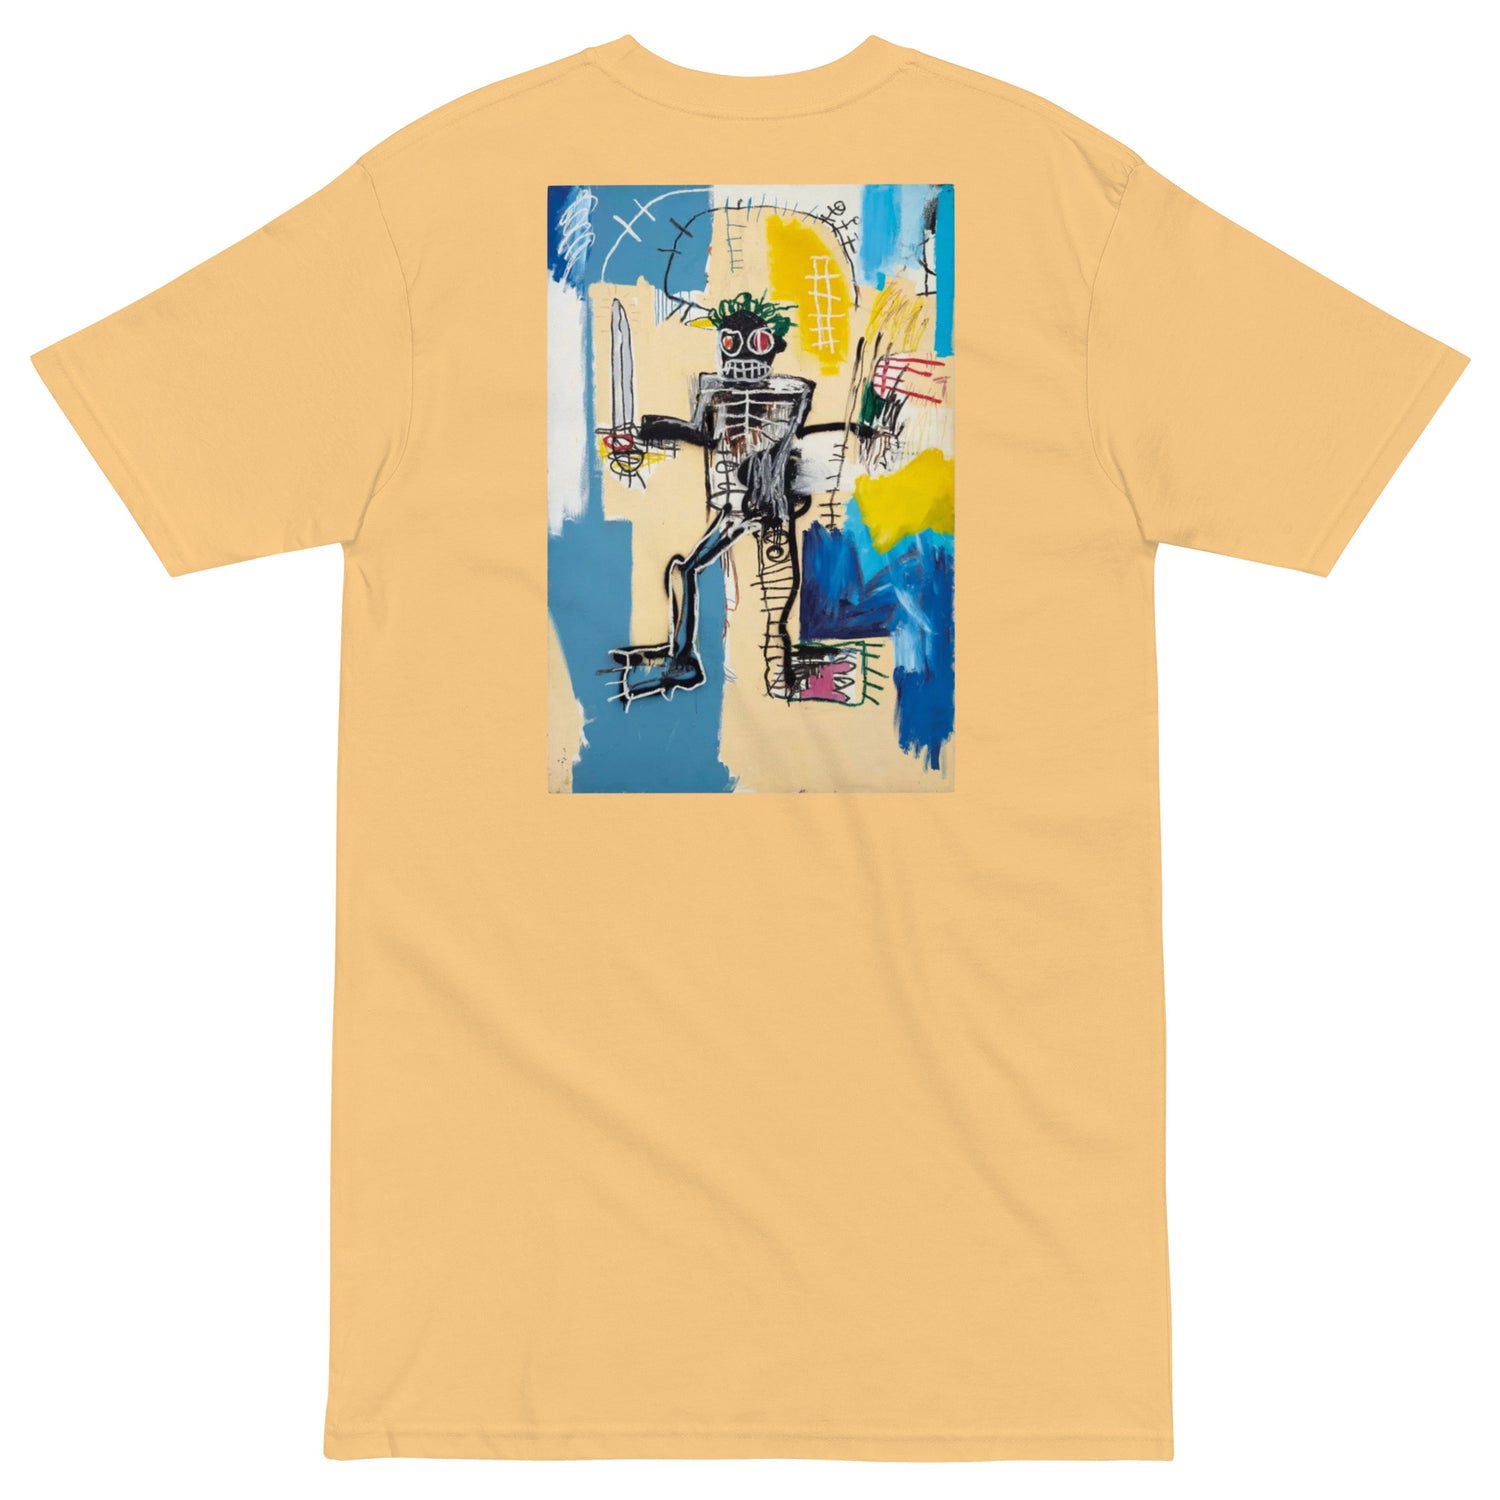 Jean-Michel Basquiat "Warrior" 1982 Artwork Embroidered + Printed Premium Streetwear T-shirt Yellow